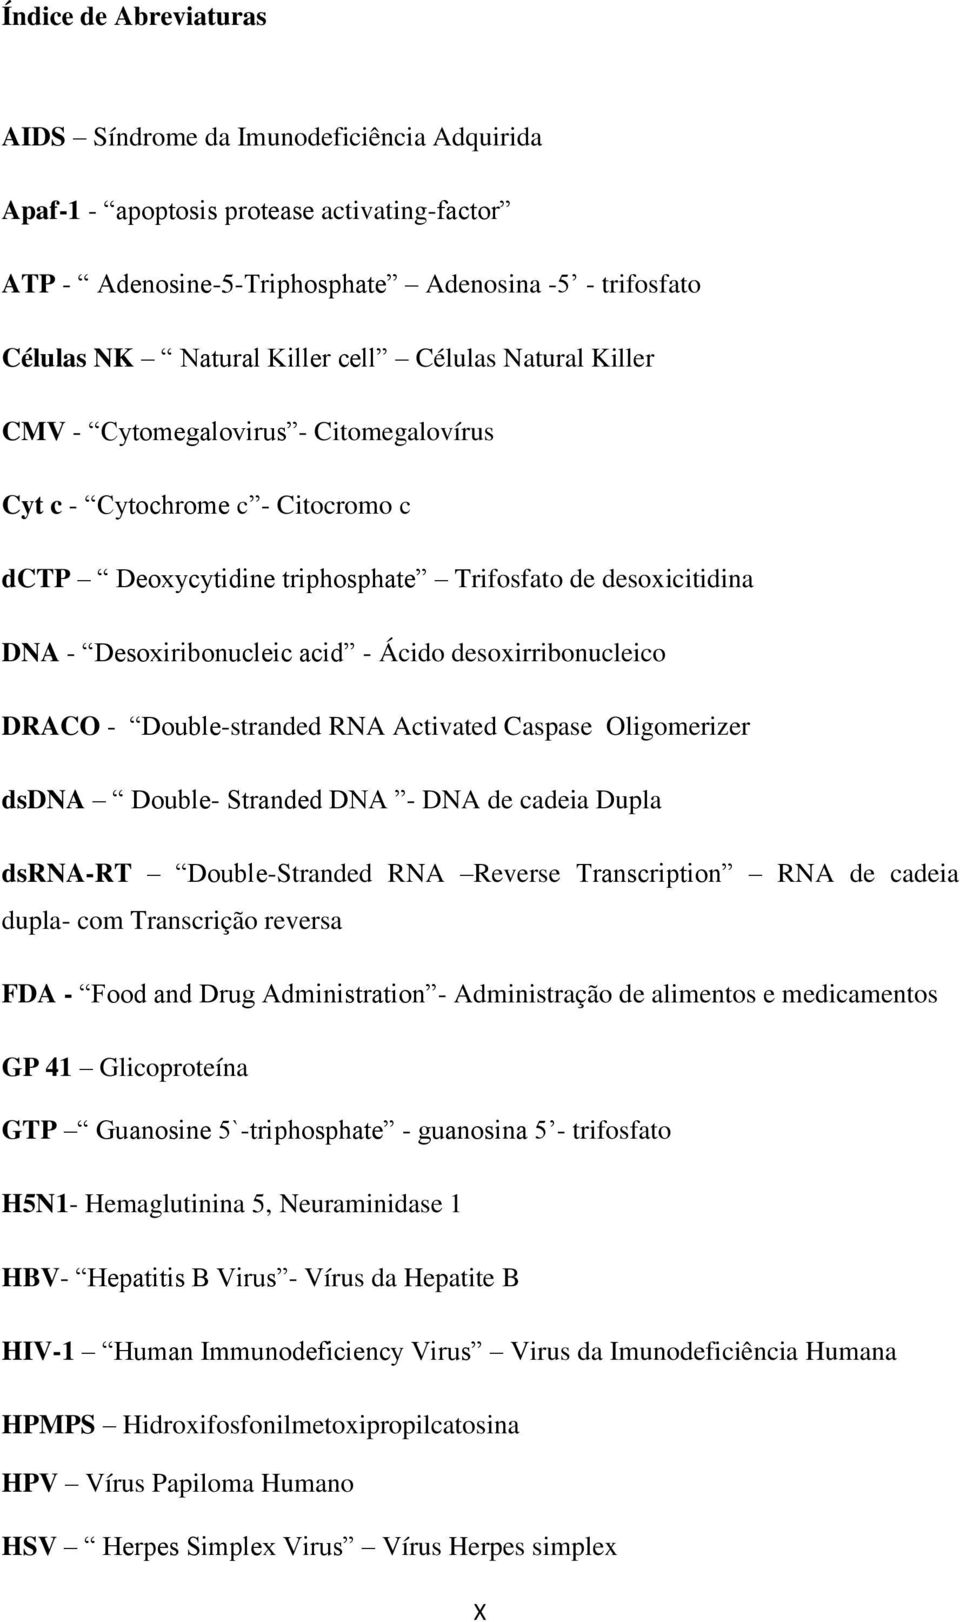 Ácido desoxirribonucleico DRACO - Double-stranded RNA Activated Caspase Oligomerizer dsdna Double- Stranded DNA - DNA de cadeia Dupla dsrna-rt Double-Stranded RNA Reverse Transcription RNA de cadeia